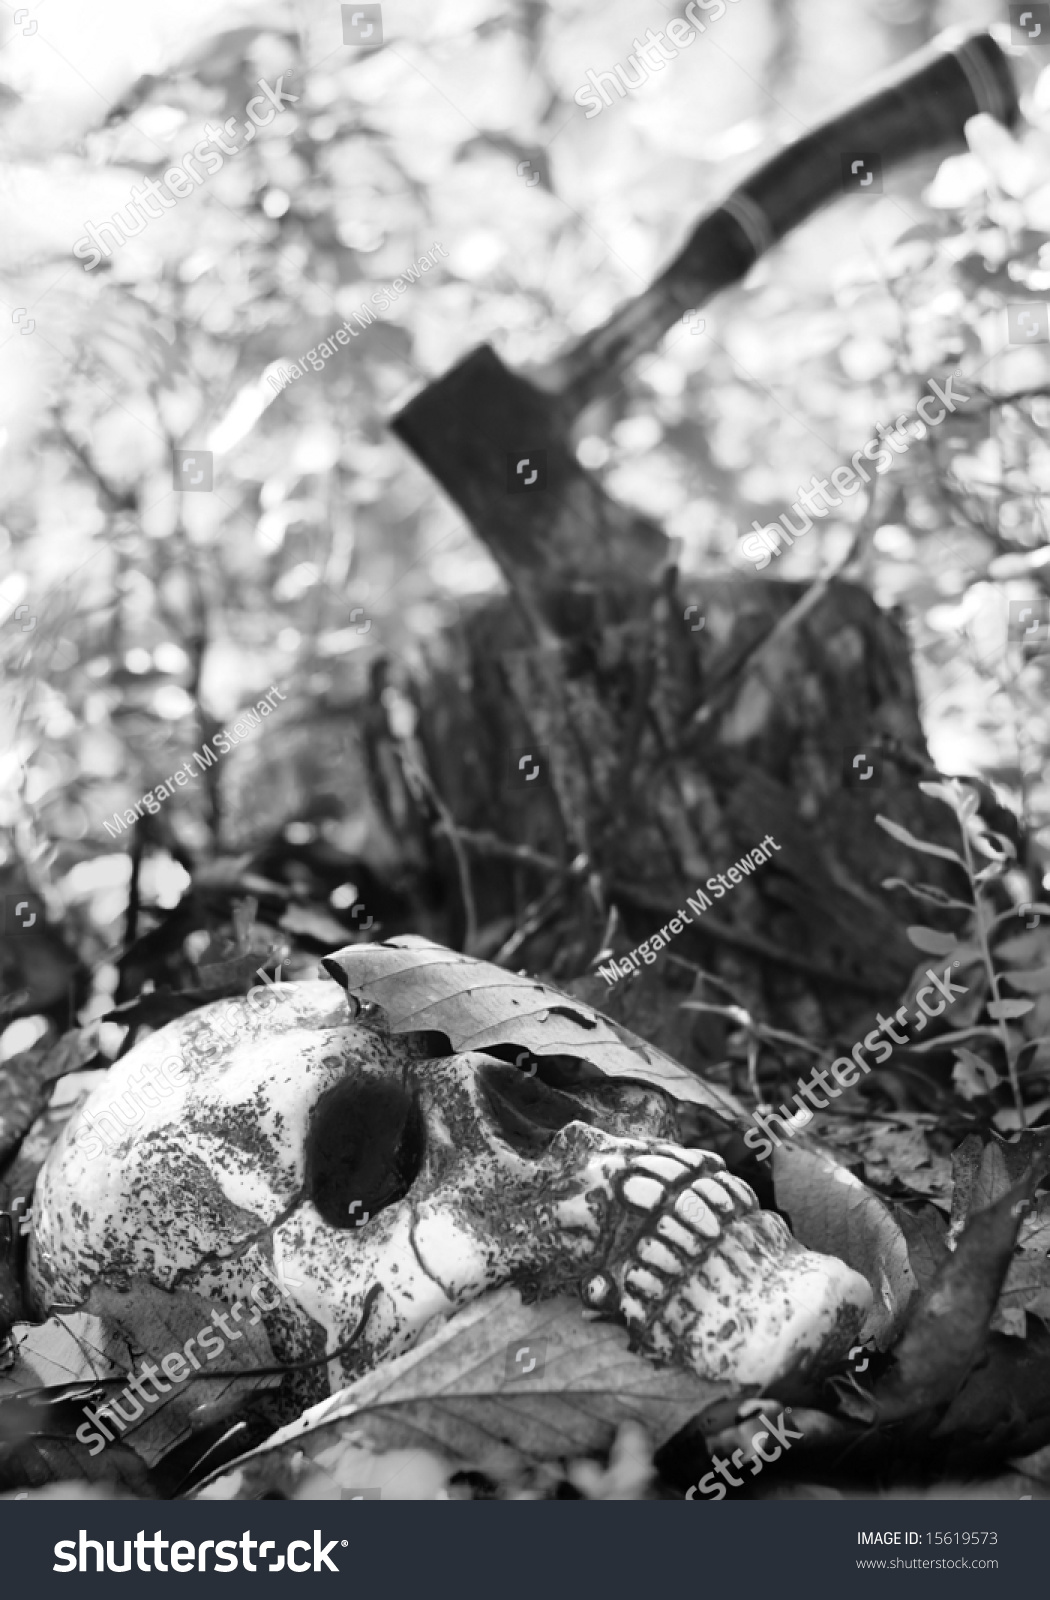 Halloween scary scene - buried skull with killer's hatchet in background #15619573